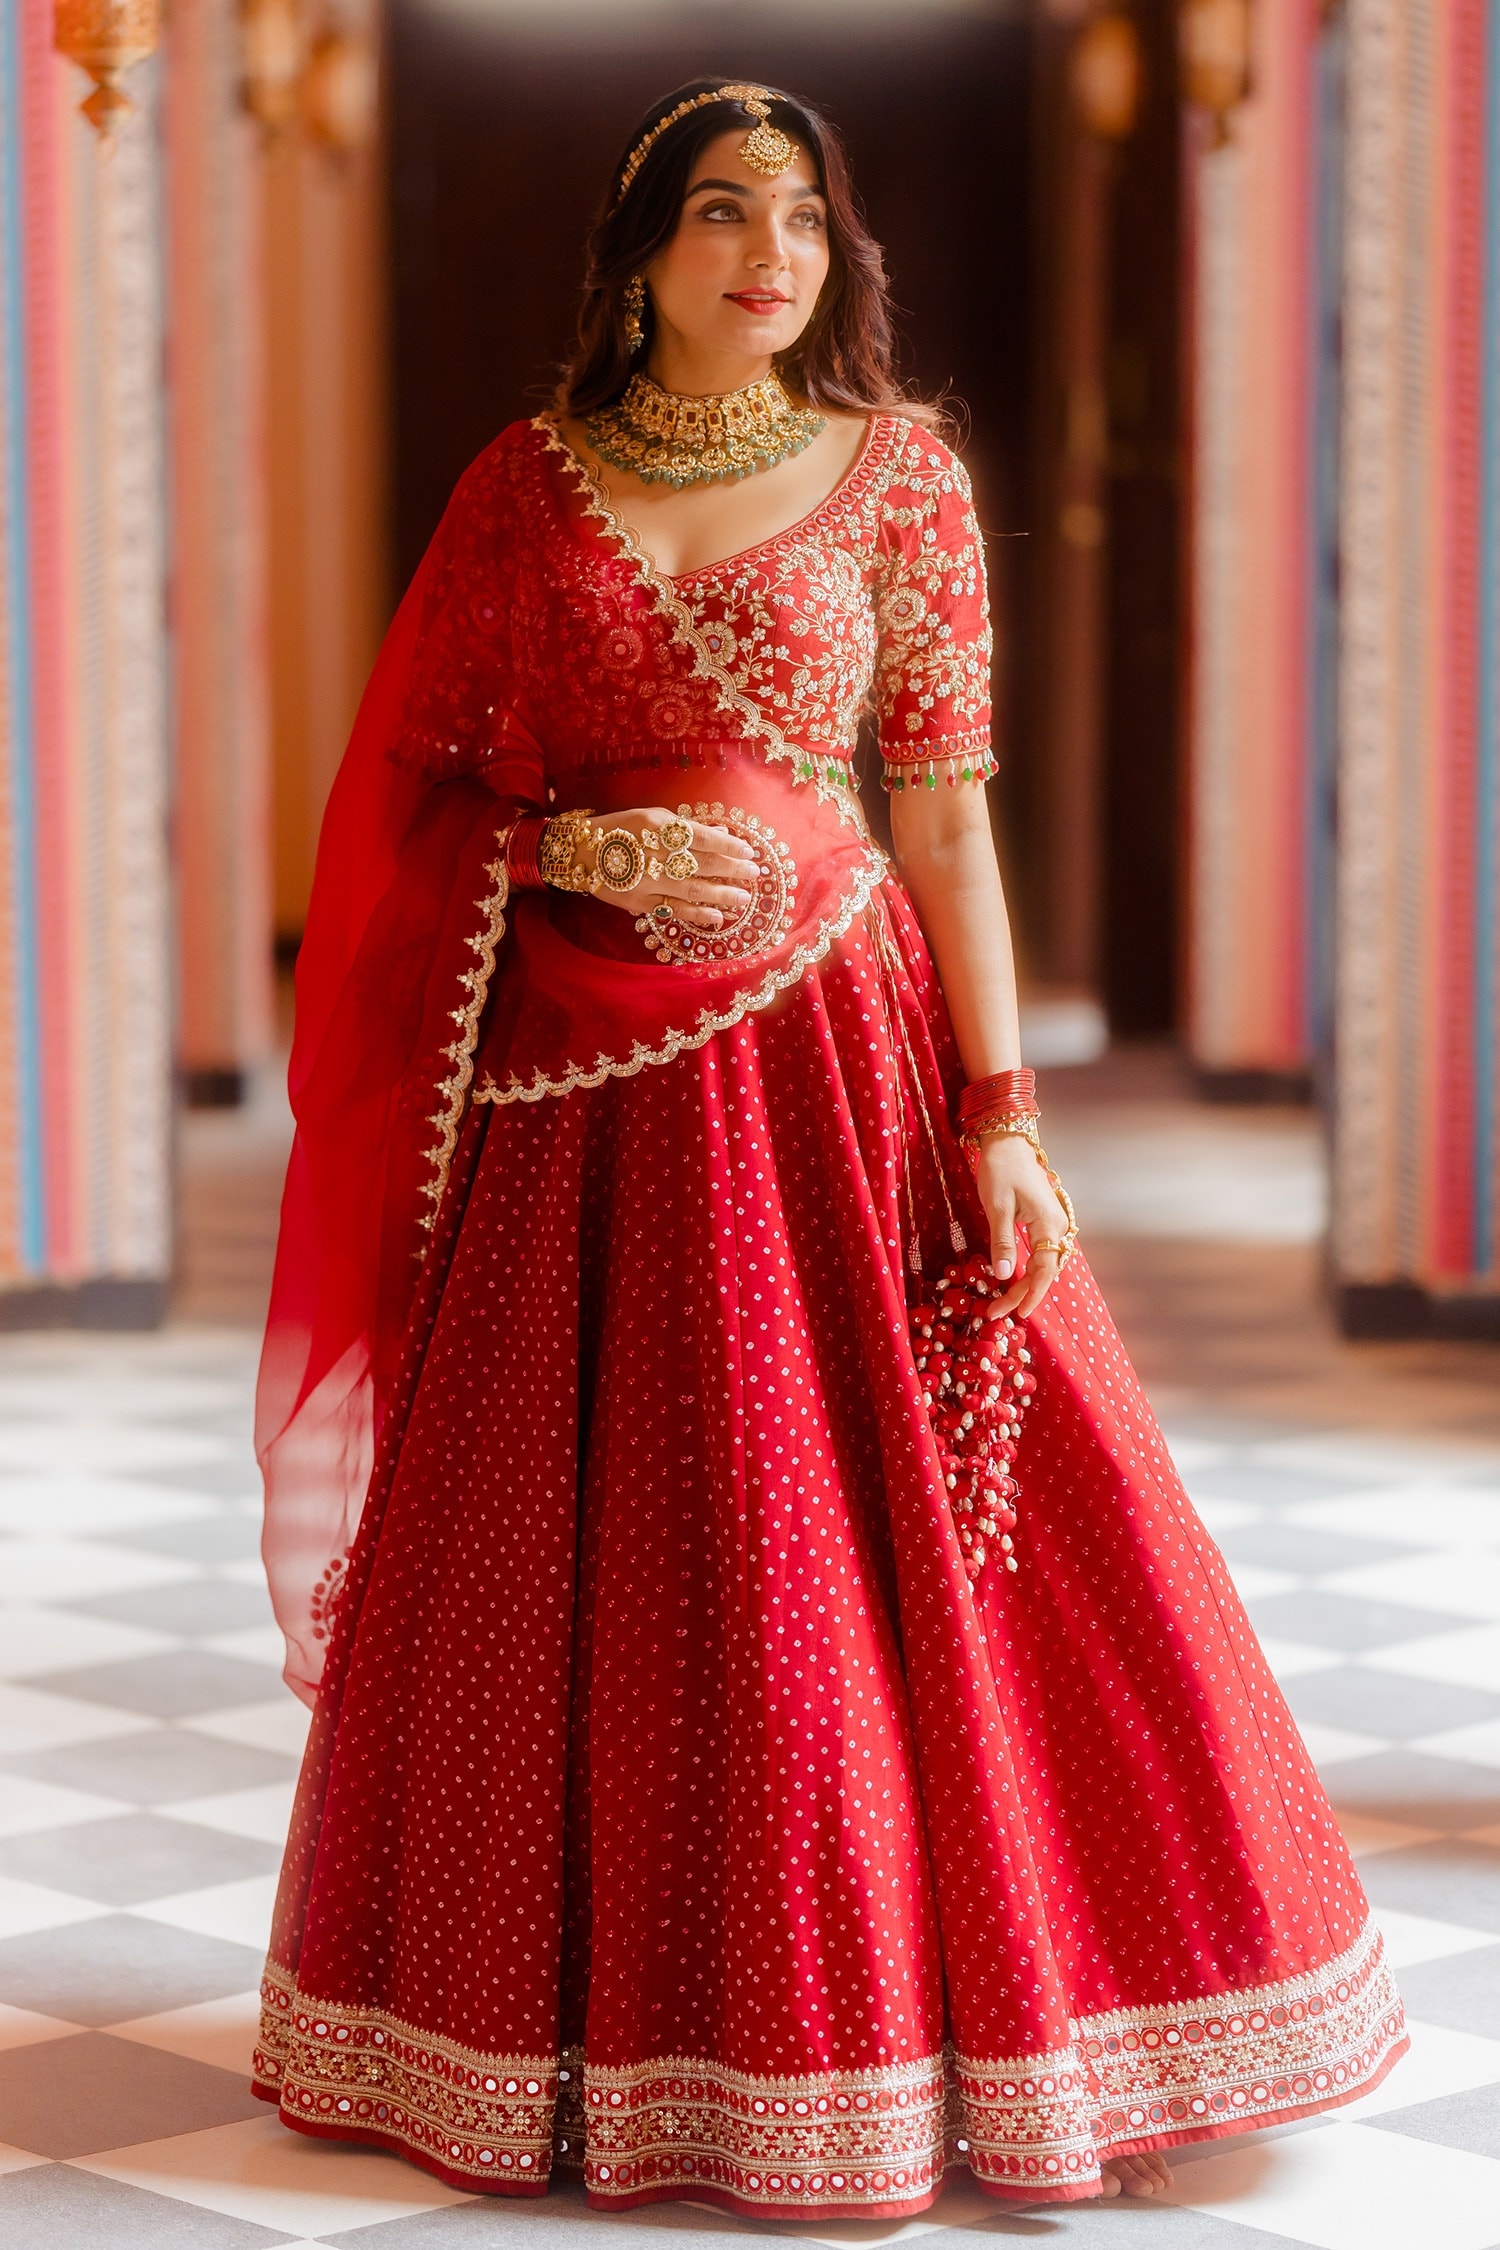 10+ Bandhani Lehengas For Brides Who Love Traditional Textiles! - Wedbook